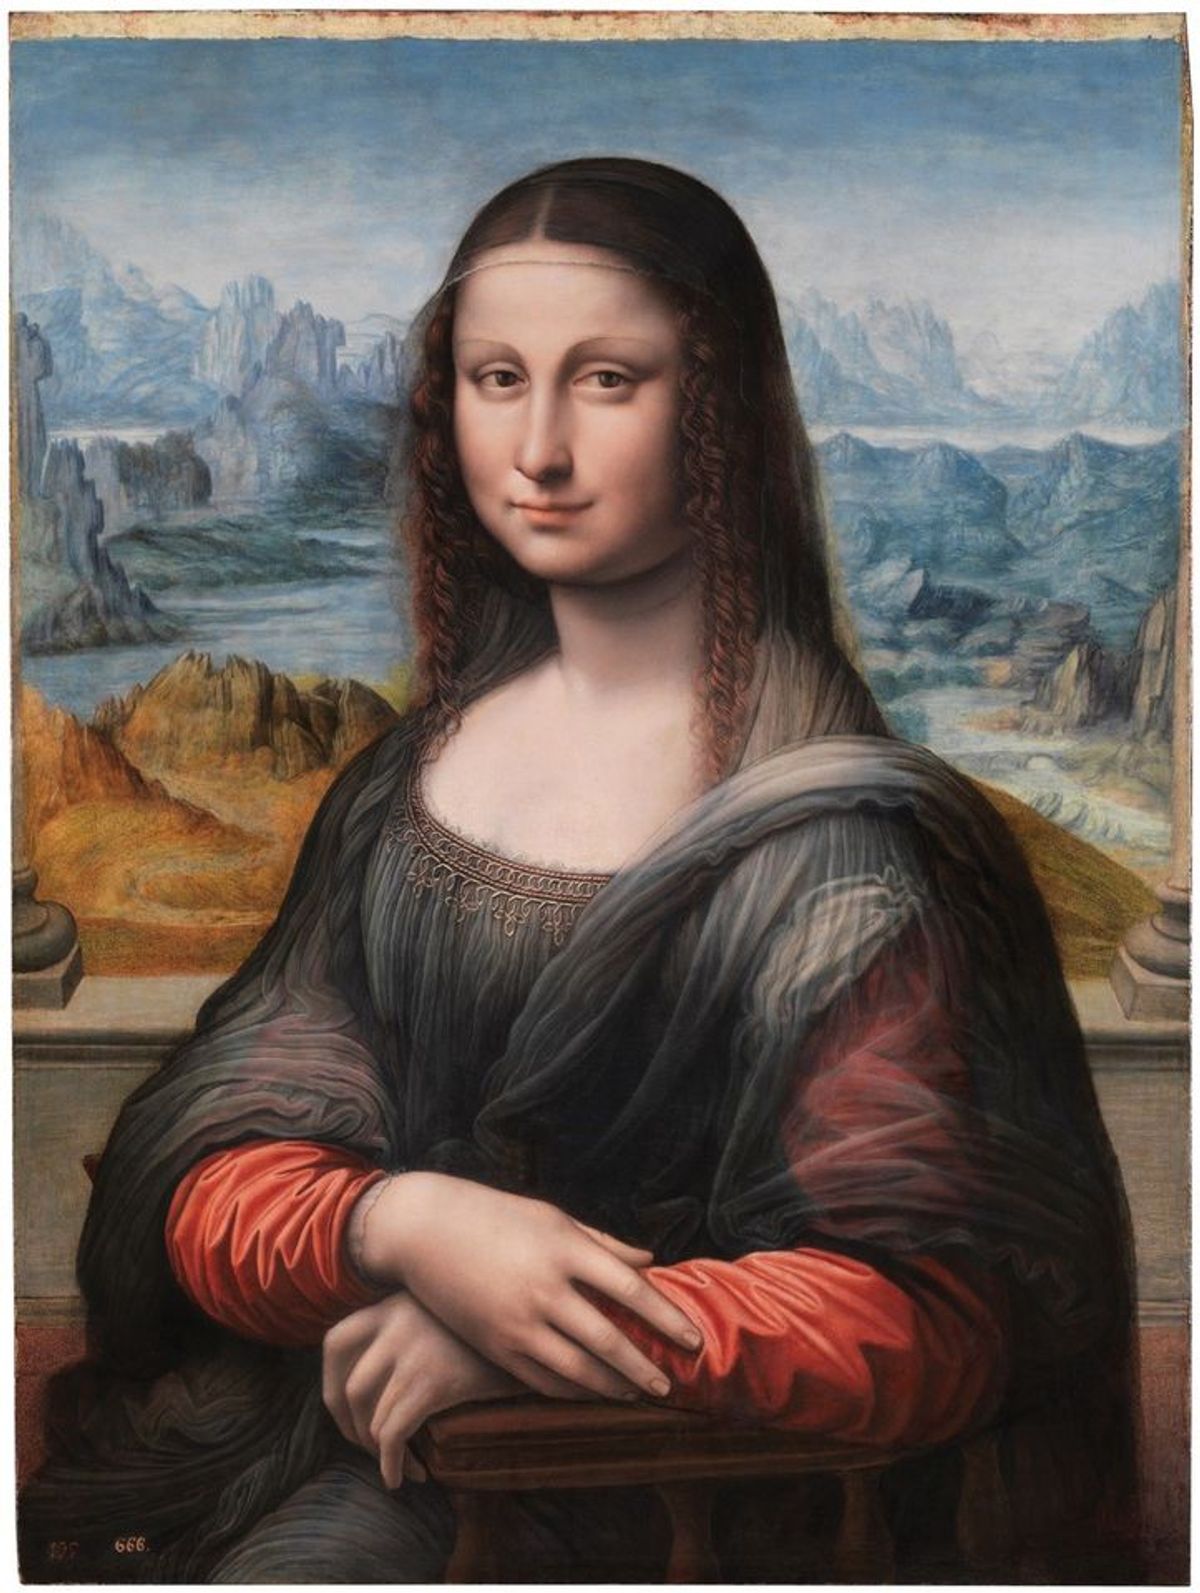 The Prado’s copy of the Mona Lisa, attributed to the workshop of Leonardo (1507-16) Courtesy of Museo del Prado, Madrid
